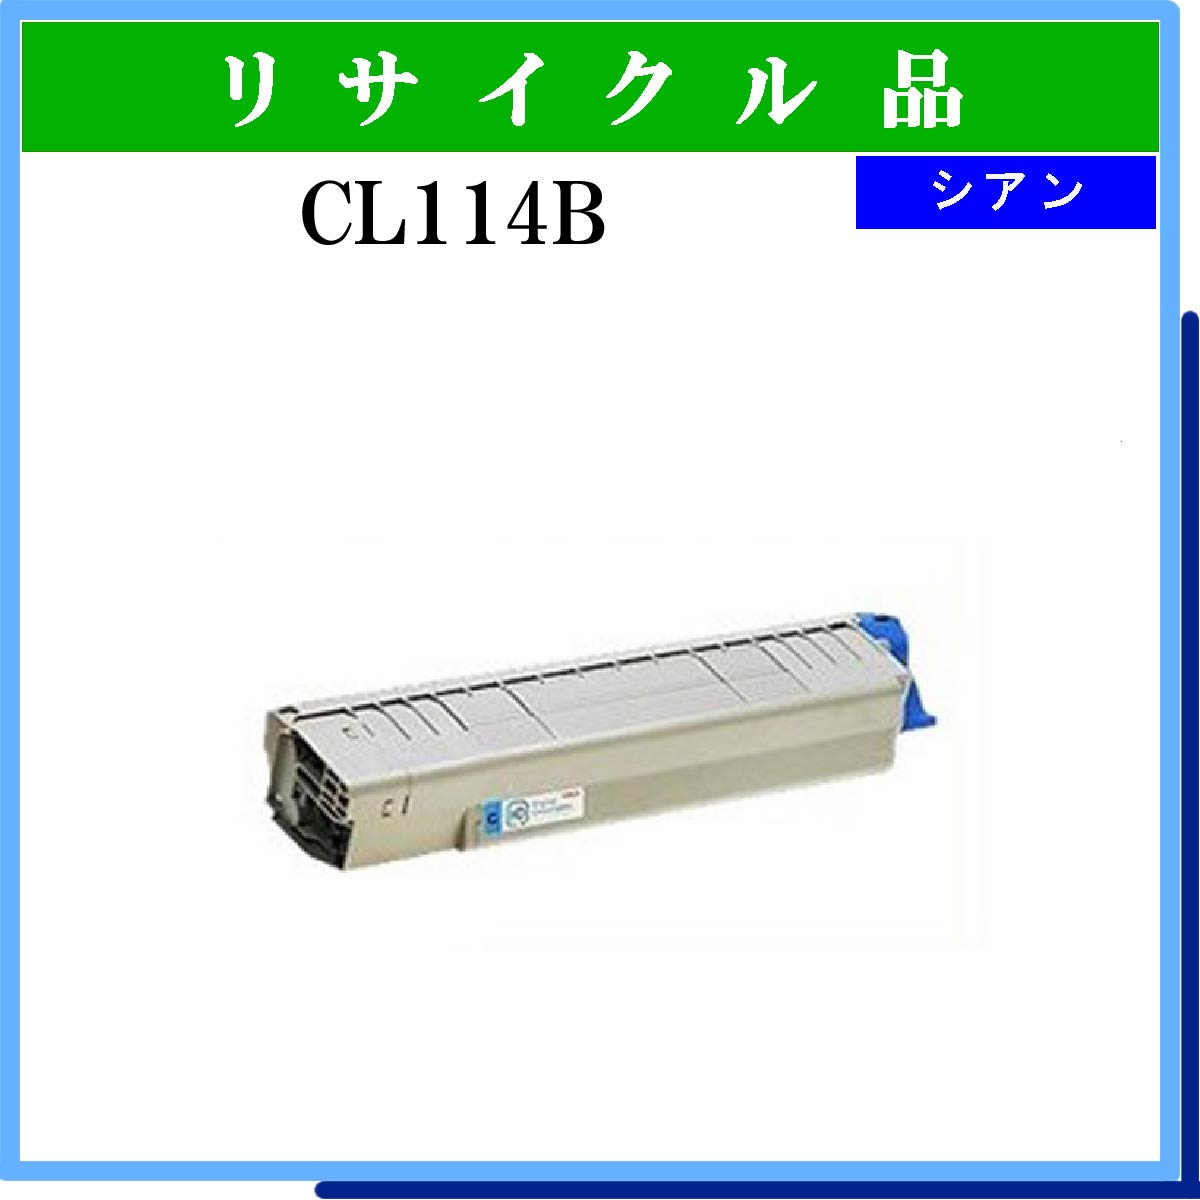 CL114B ｼｱﾝ - ウインドウを閉じる